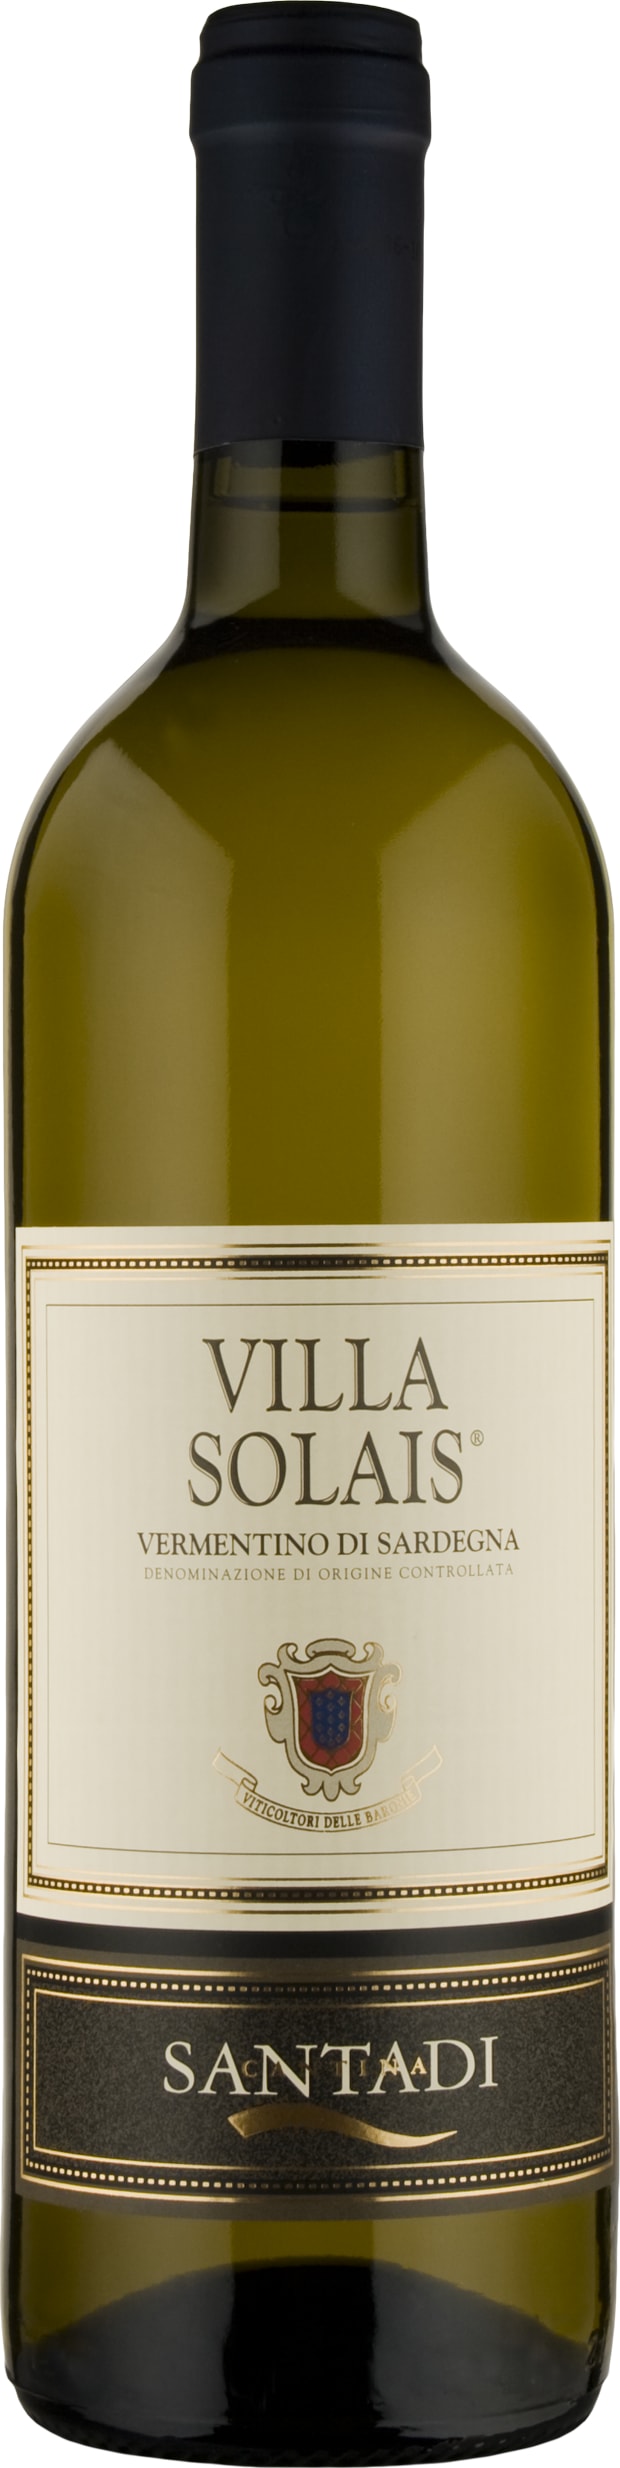 Santadi Vermentino di Sardegna, Villa Solais 2022 75cl - Buy Santadi Wines from GREAT WINES DIRECT wine shop